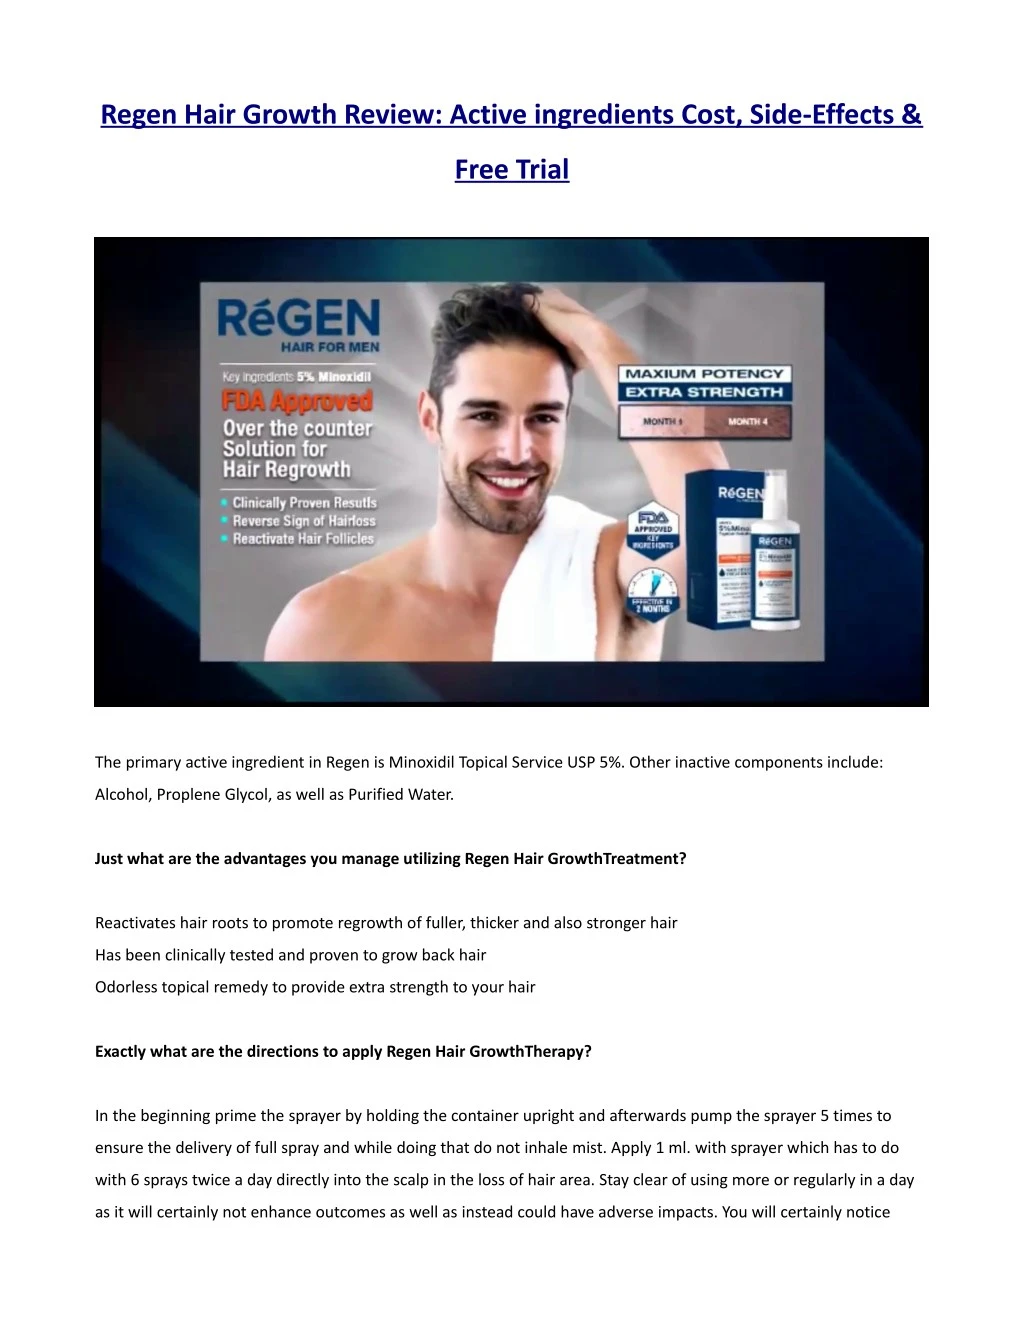 regen hair growth review active ingredients cost